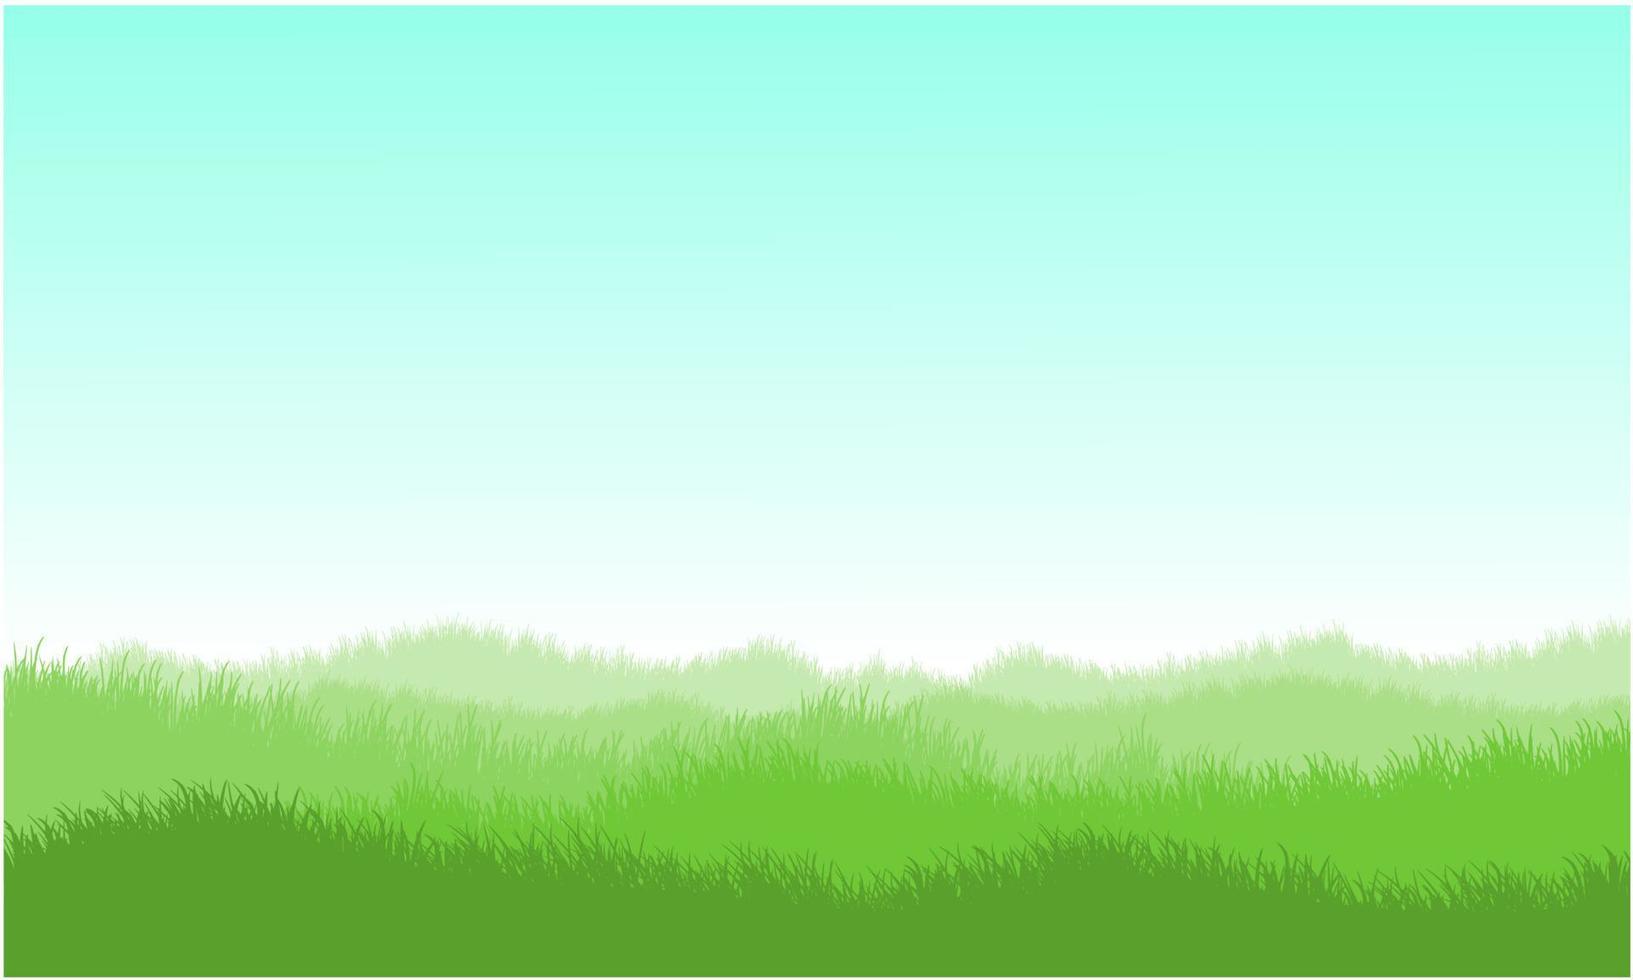 grassy field, grassy background vector